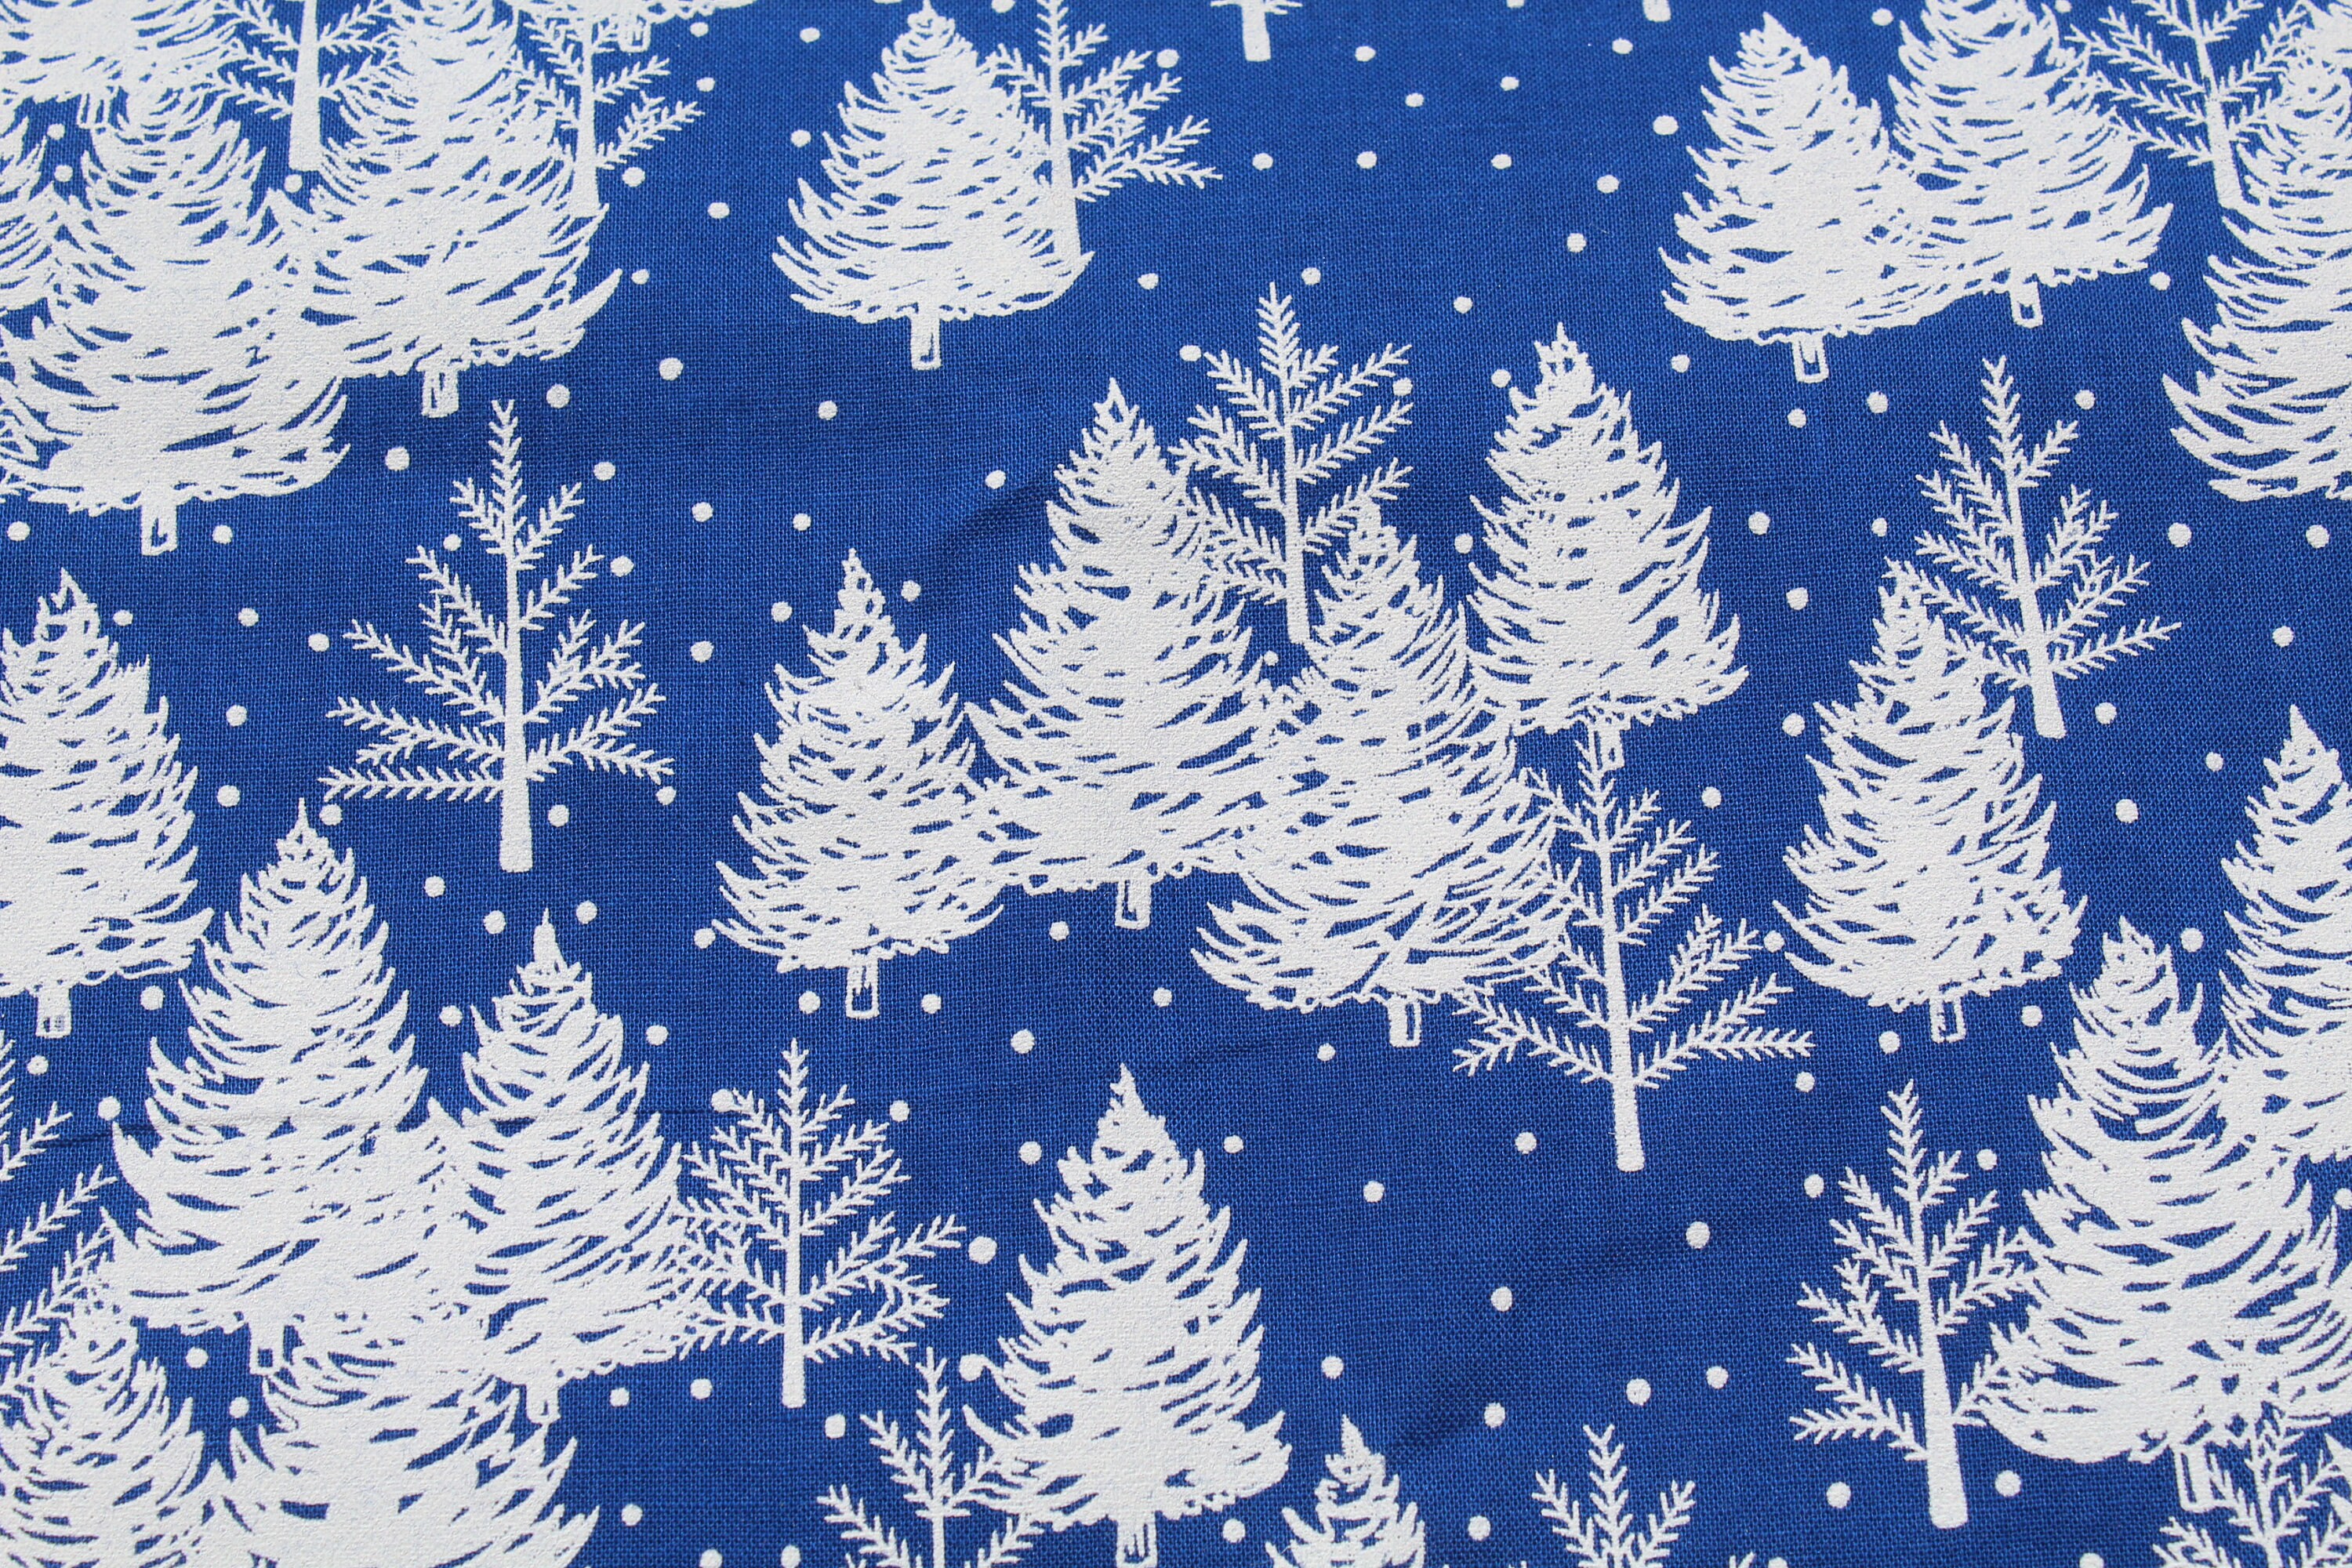 Nose to Nose, Christmas Fabric Squares, Snowman, Deer, Birds, Blue, Bl -  Keri Quilts